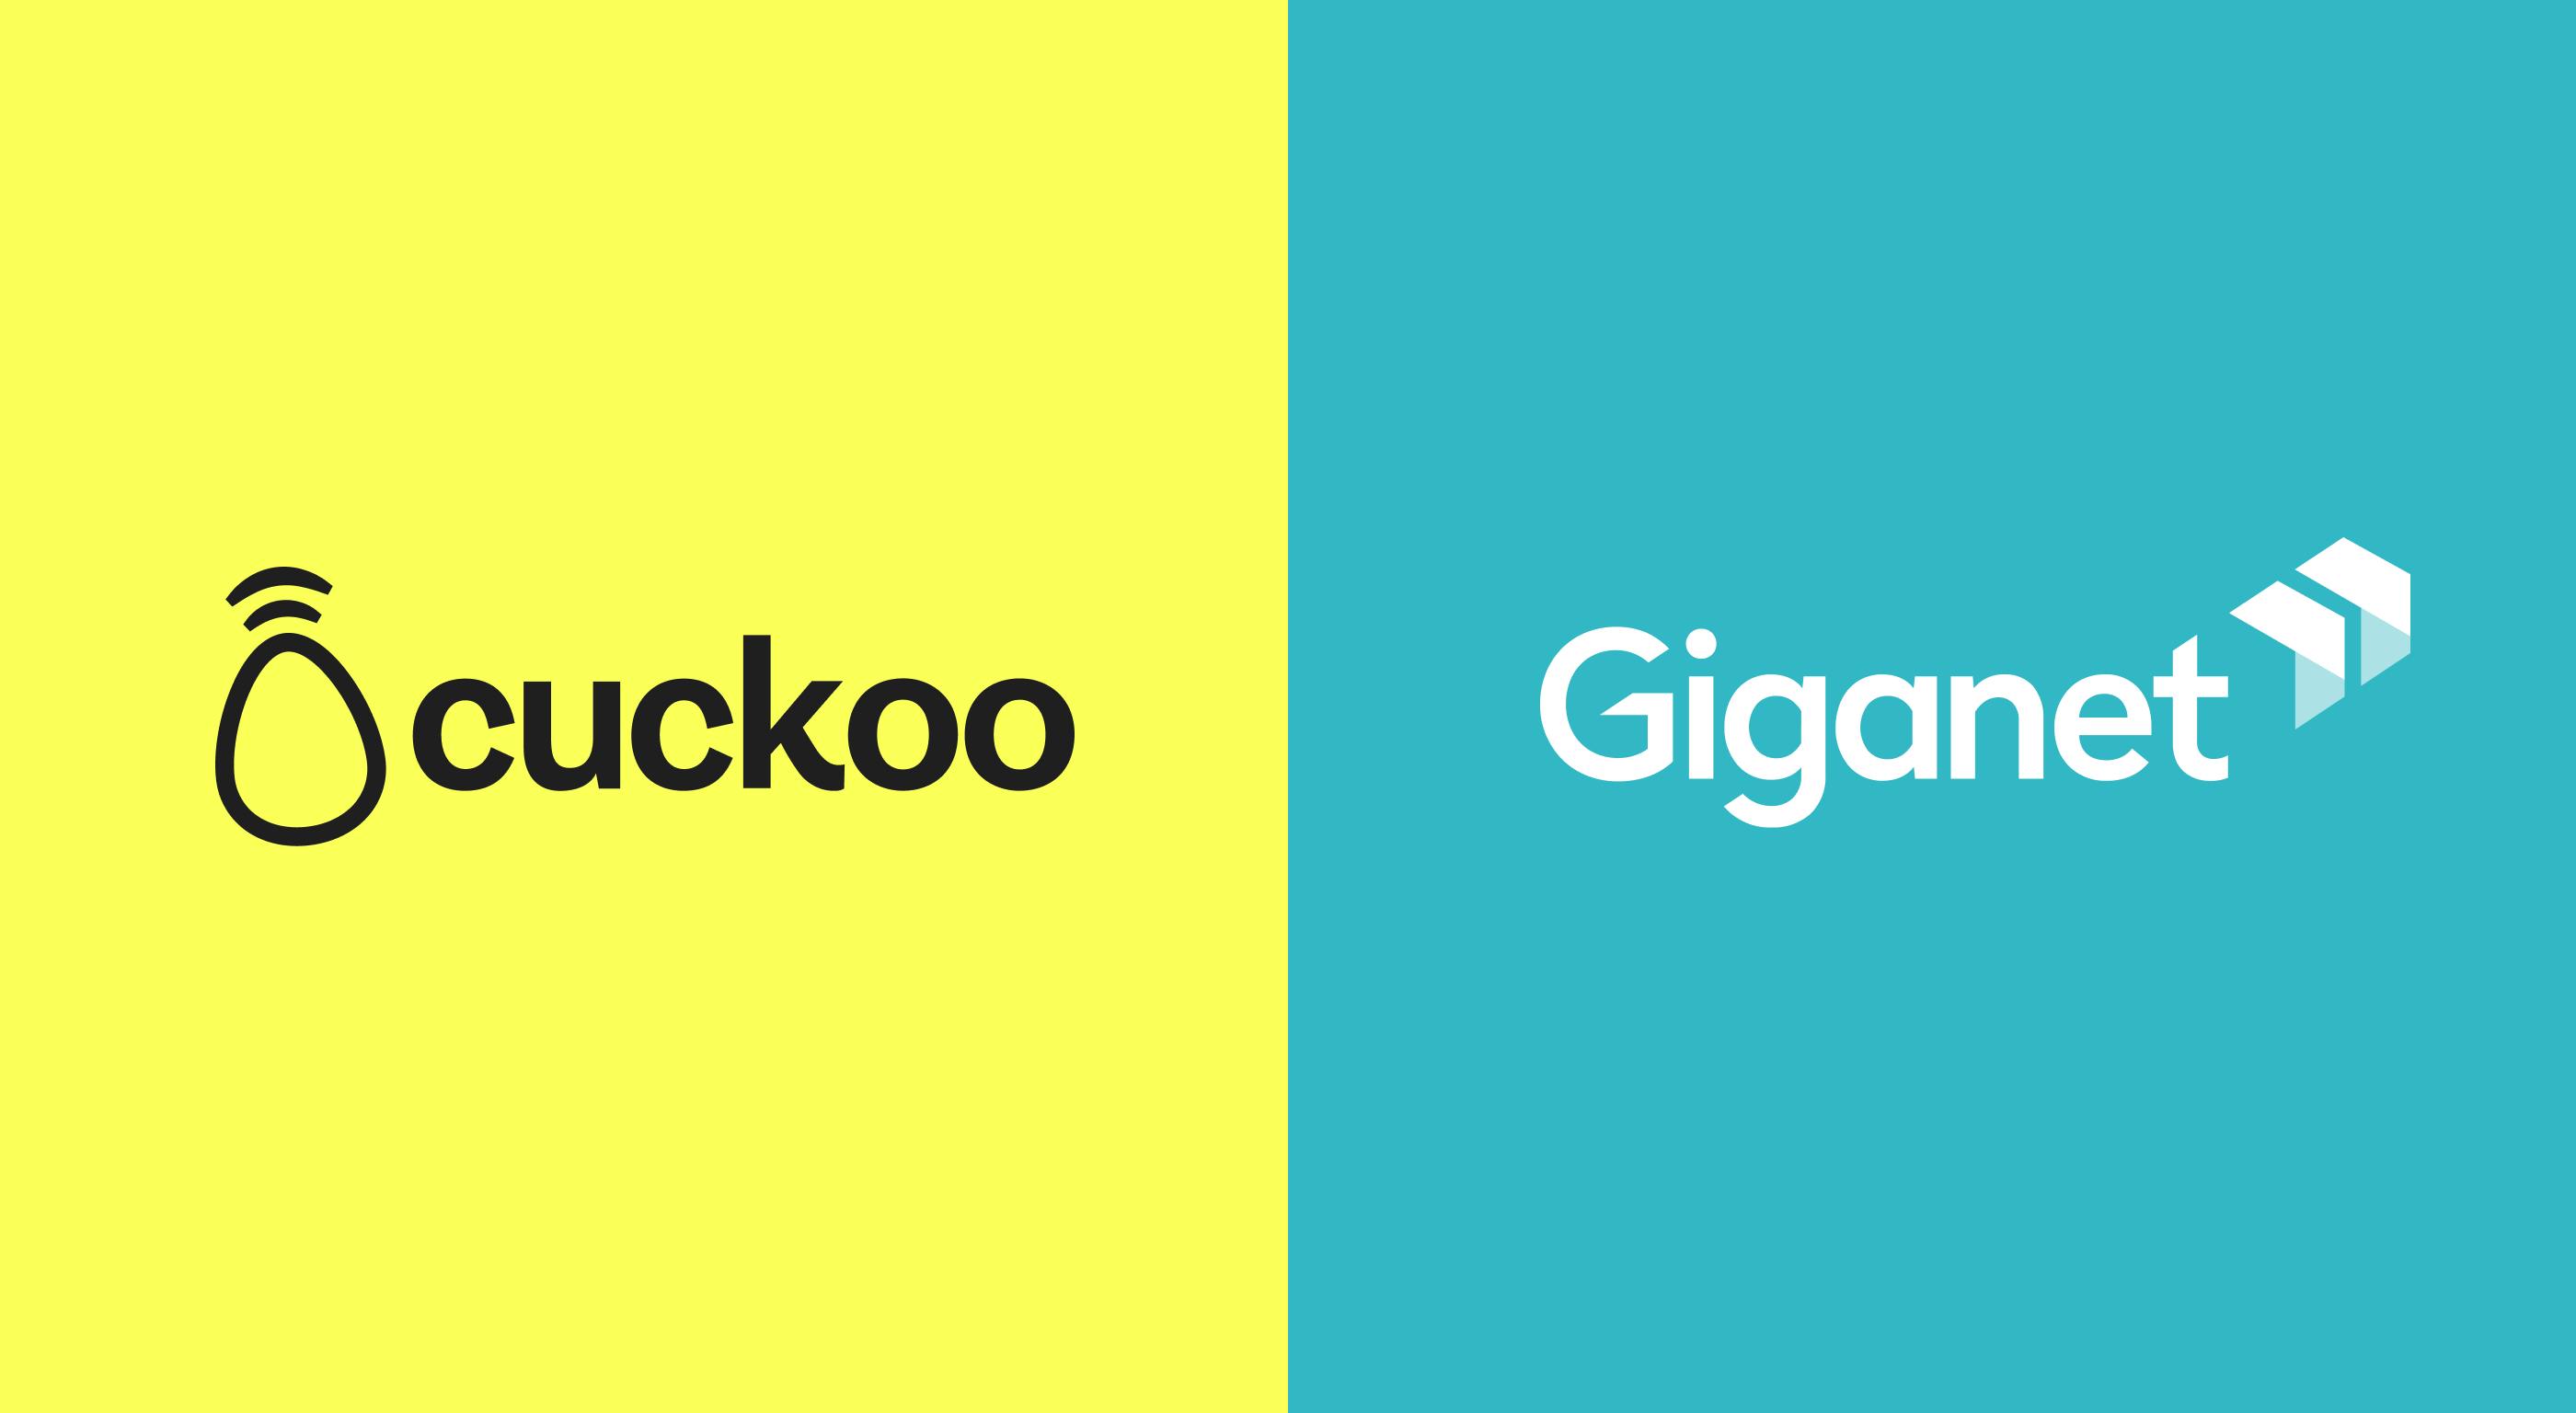 Giganet acquires Cuckoo in bid to shake up broadband market